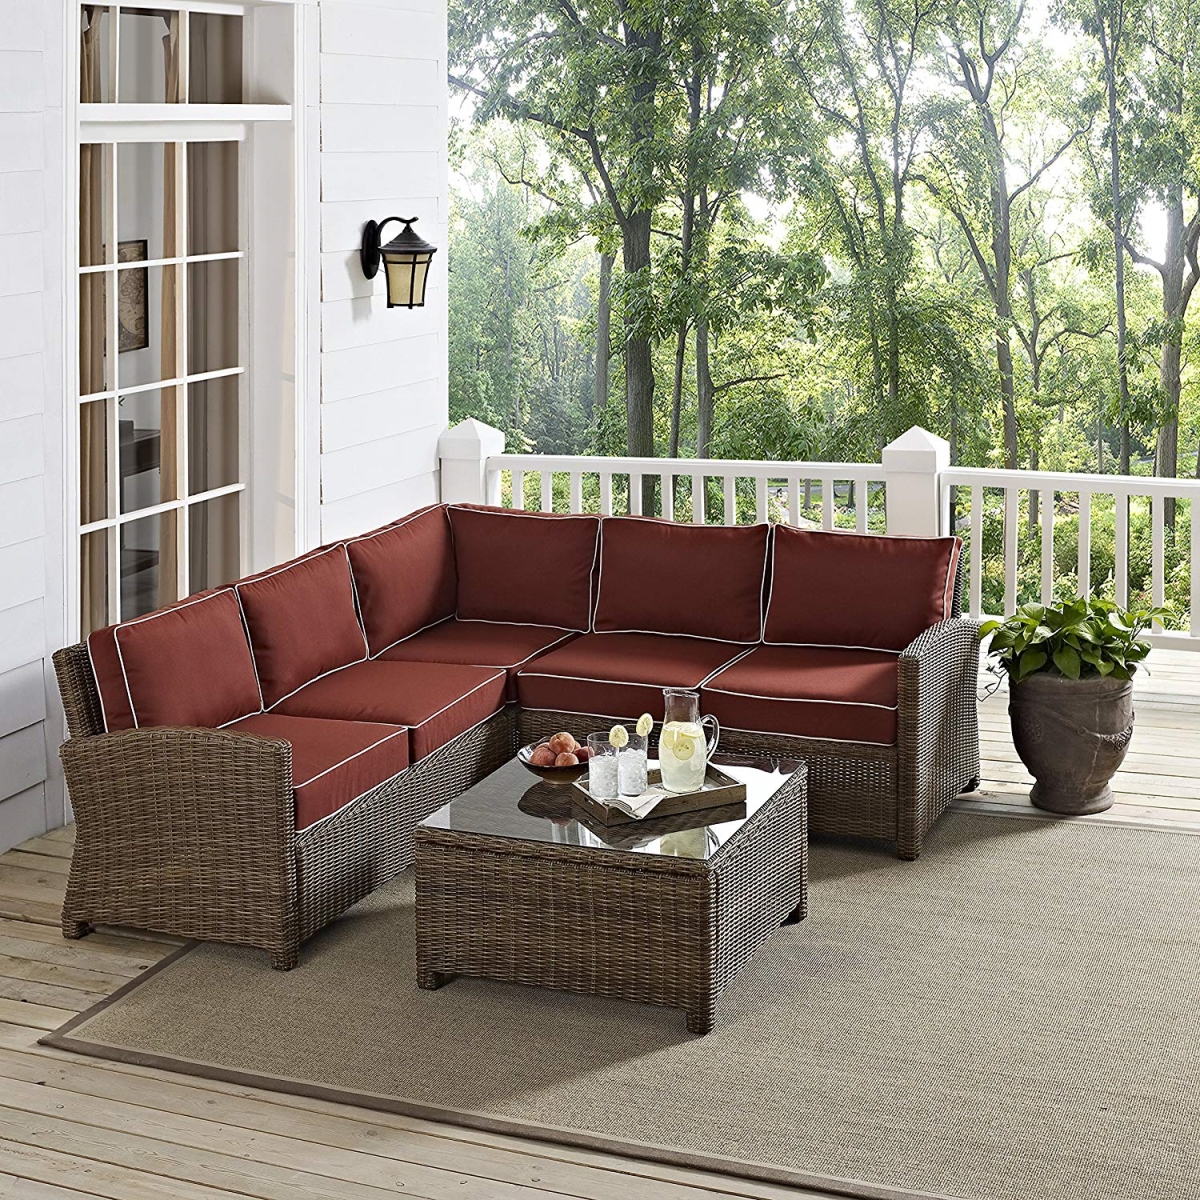 Ko70157-sg 4 Piece Bradenton Outdoor Wicker Seating Set With Sangria Cushions - Weathered Brown